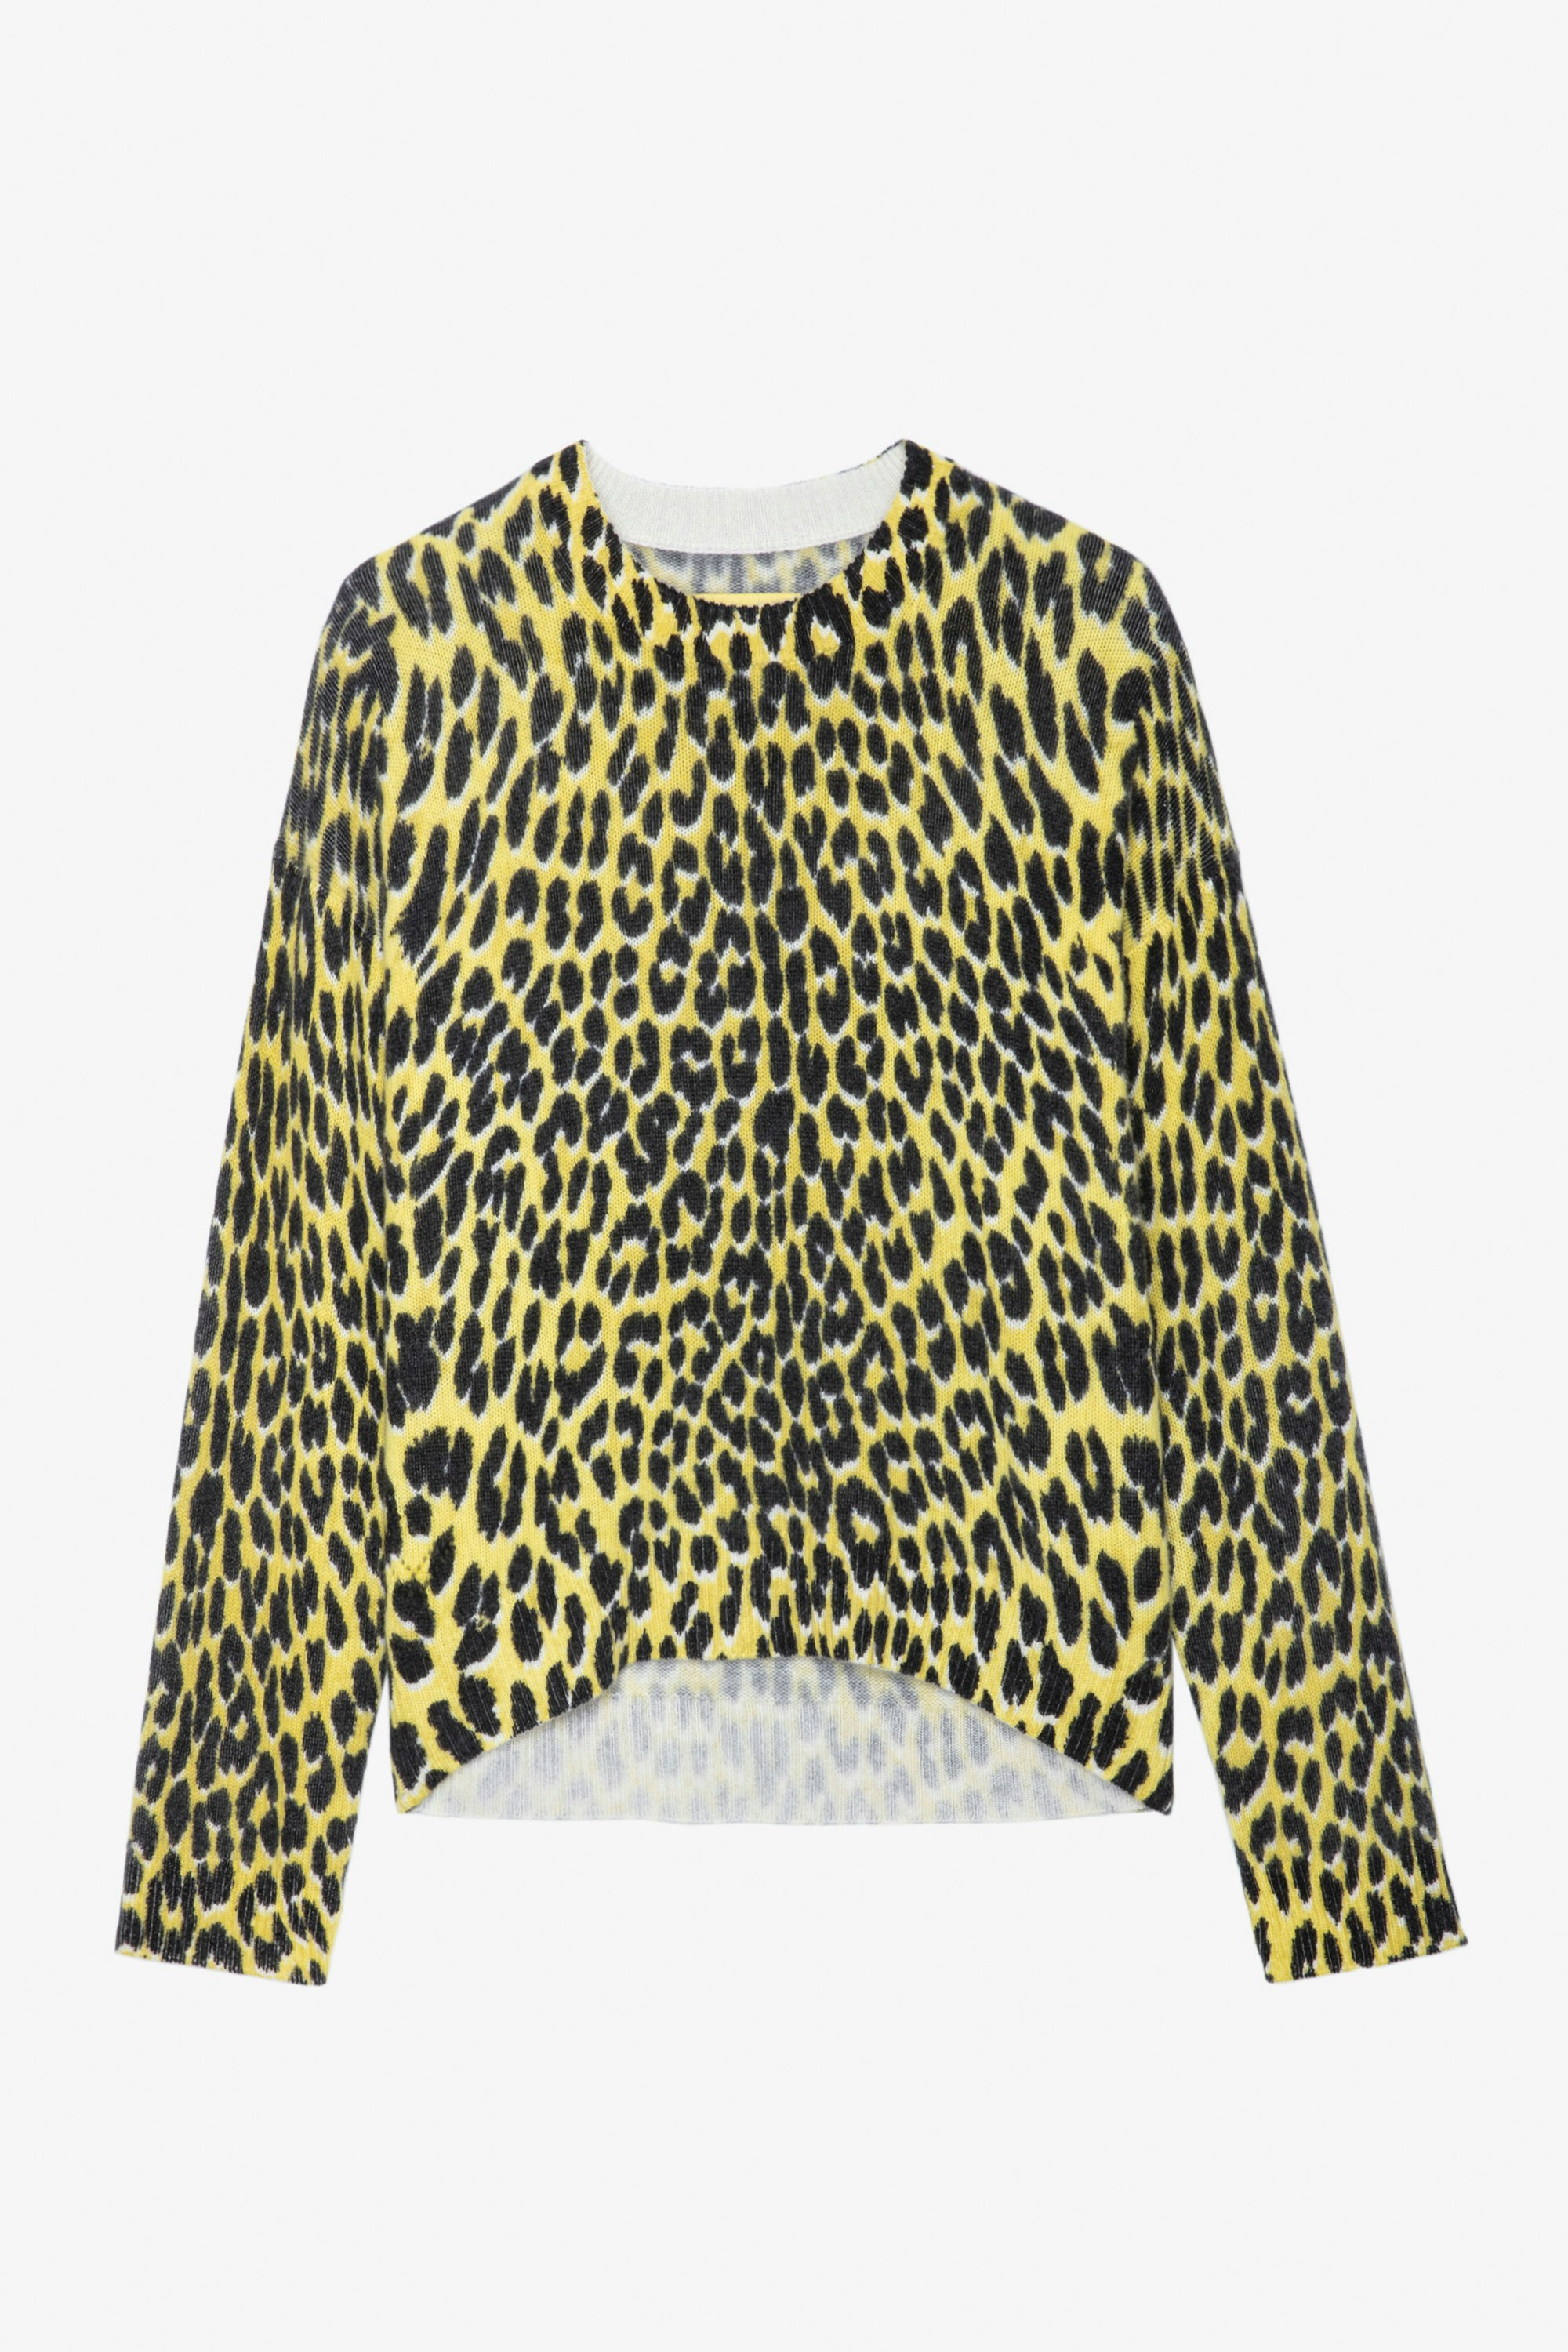 Markus Leopard Cashmere Sweater - Women’s yellow leopard-print cashmere sweater.